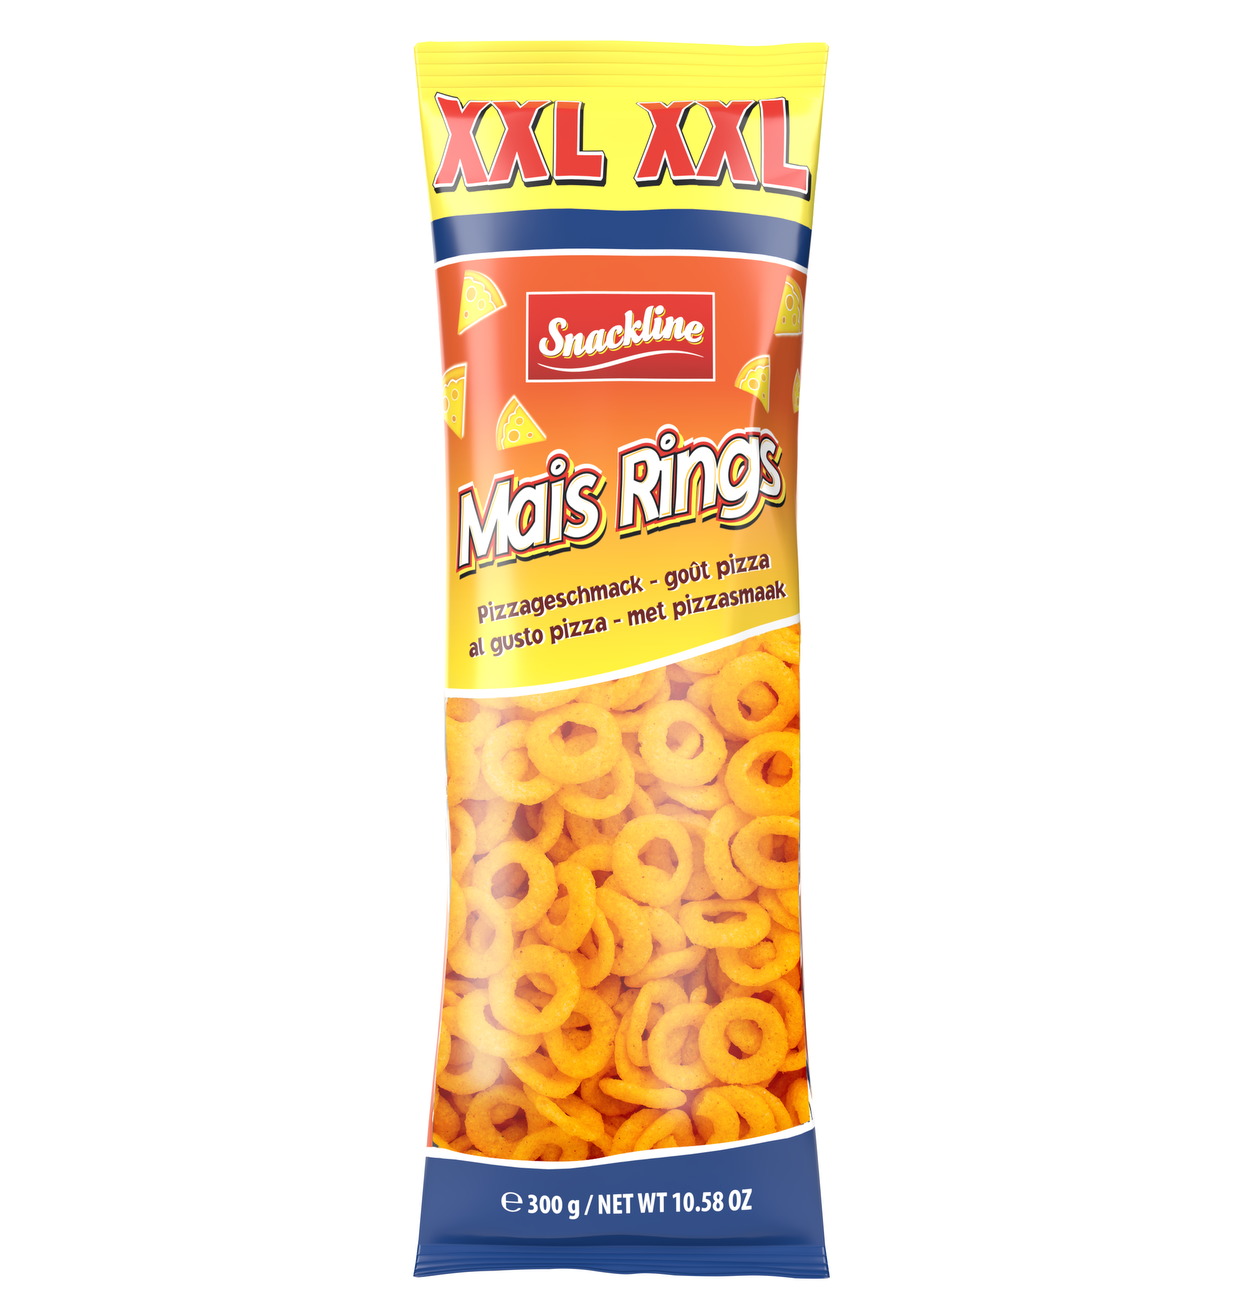 XXL Majs pizza ringar (18 x 300g)